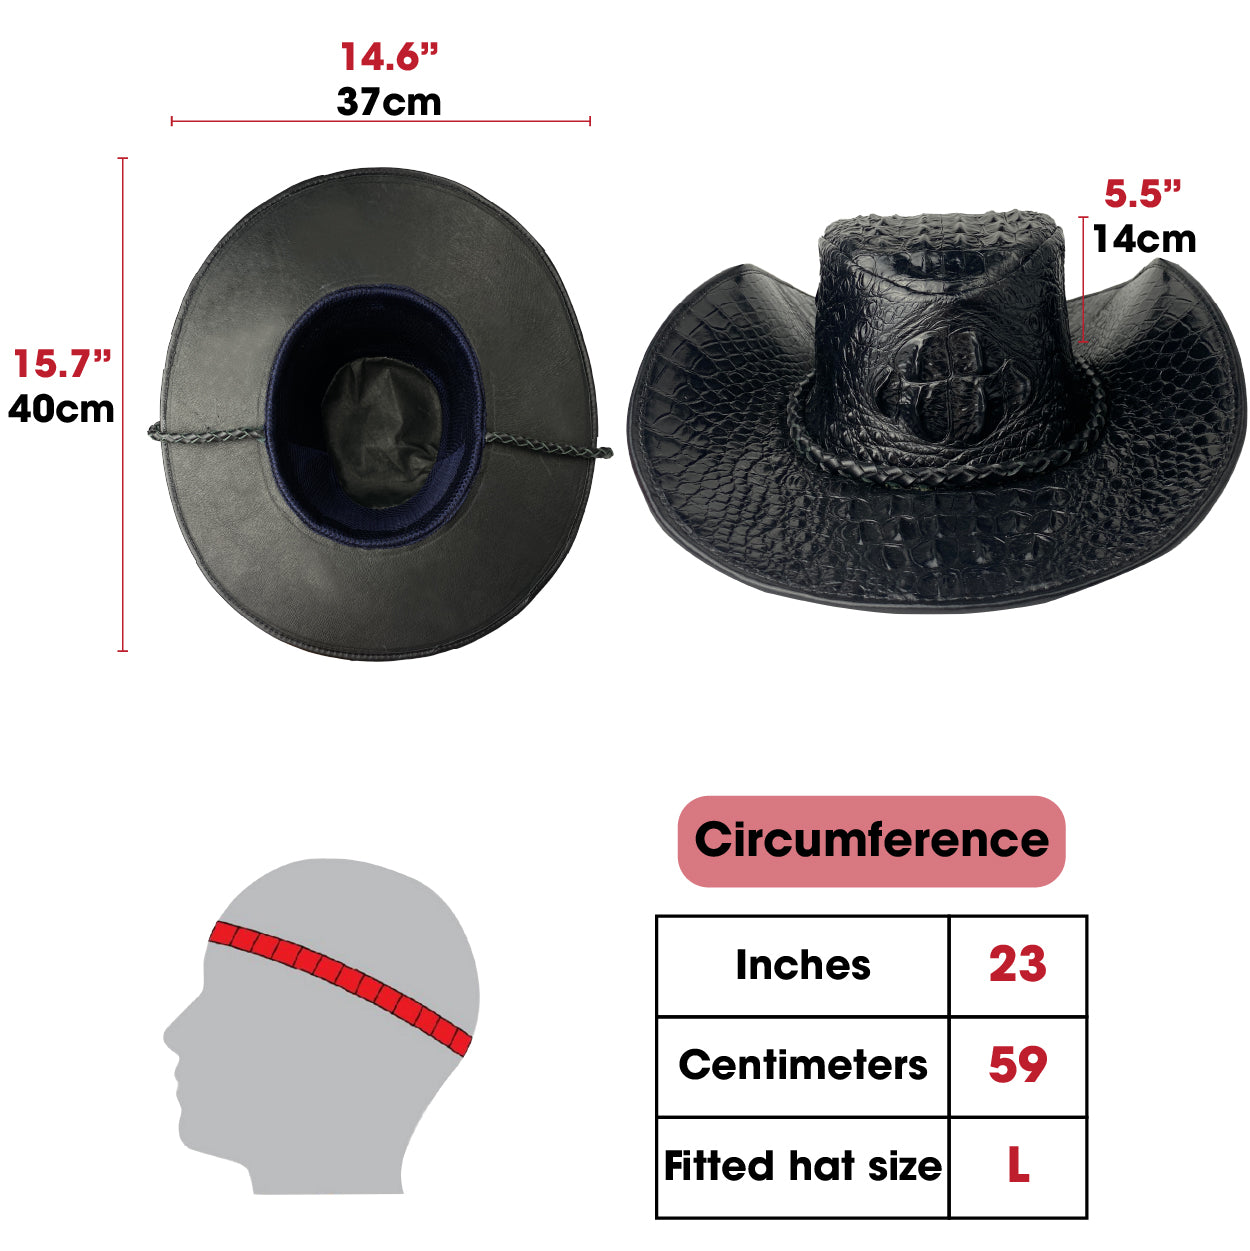 Black Alligator Cowboy Hat | Crocodile Skin Western Style Hat With Chin Cord | HAT-BLA-66